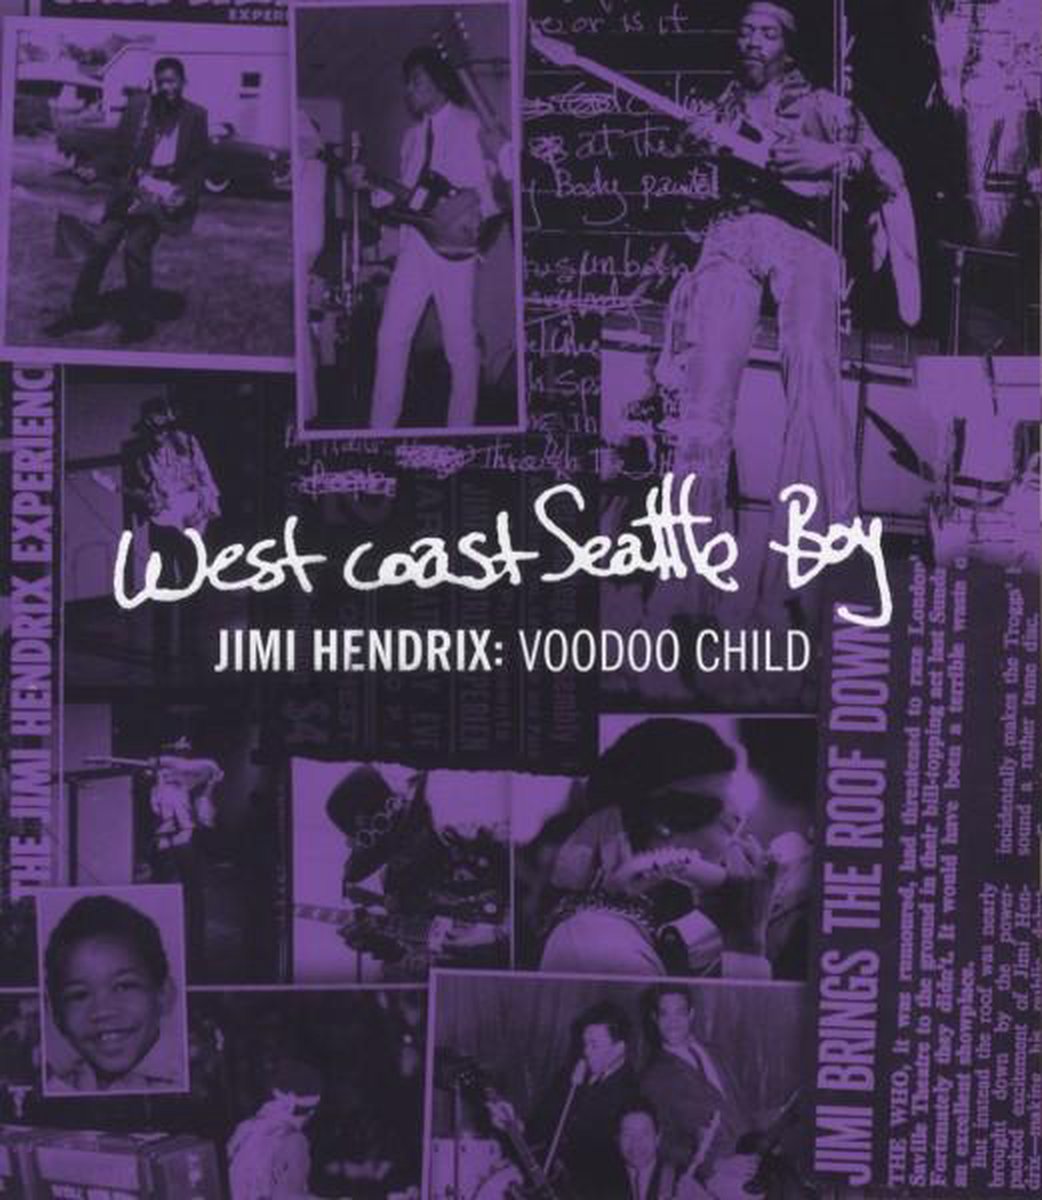 West Coast Seattle Boy - Jimi Hendrix: Voodoo Child - Jimi Hendrix